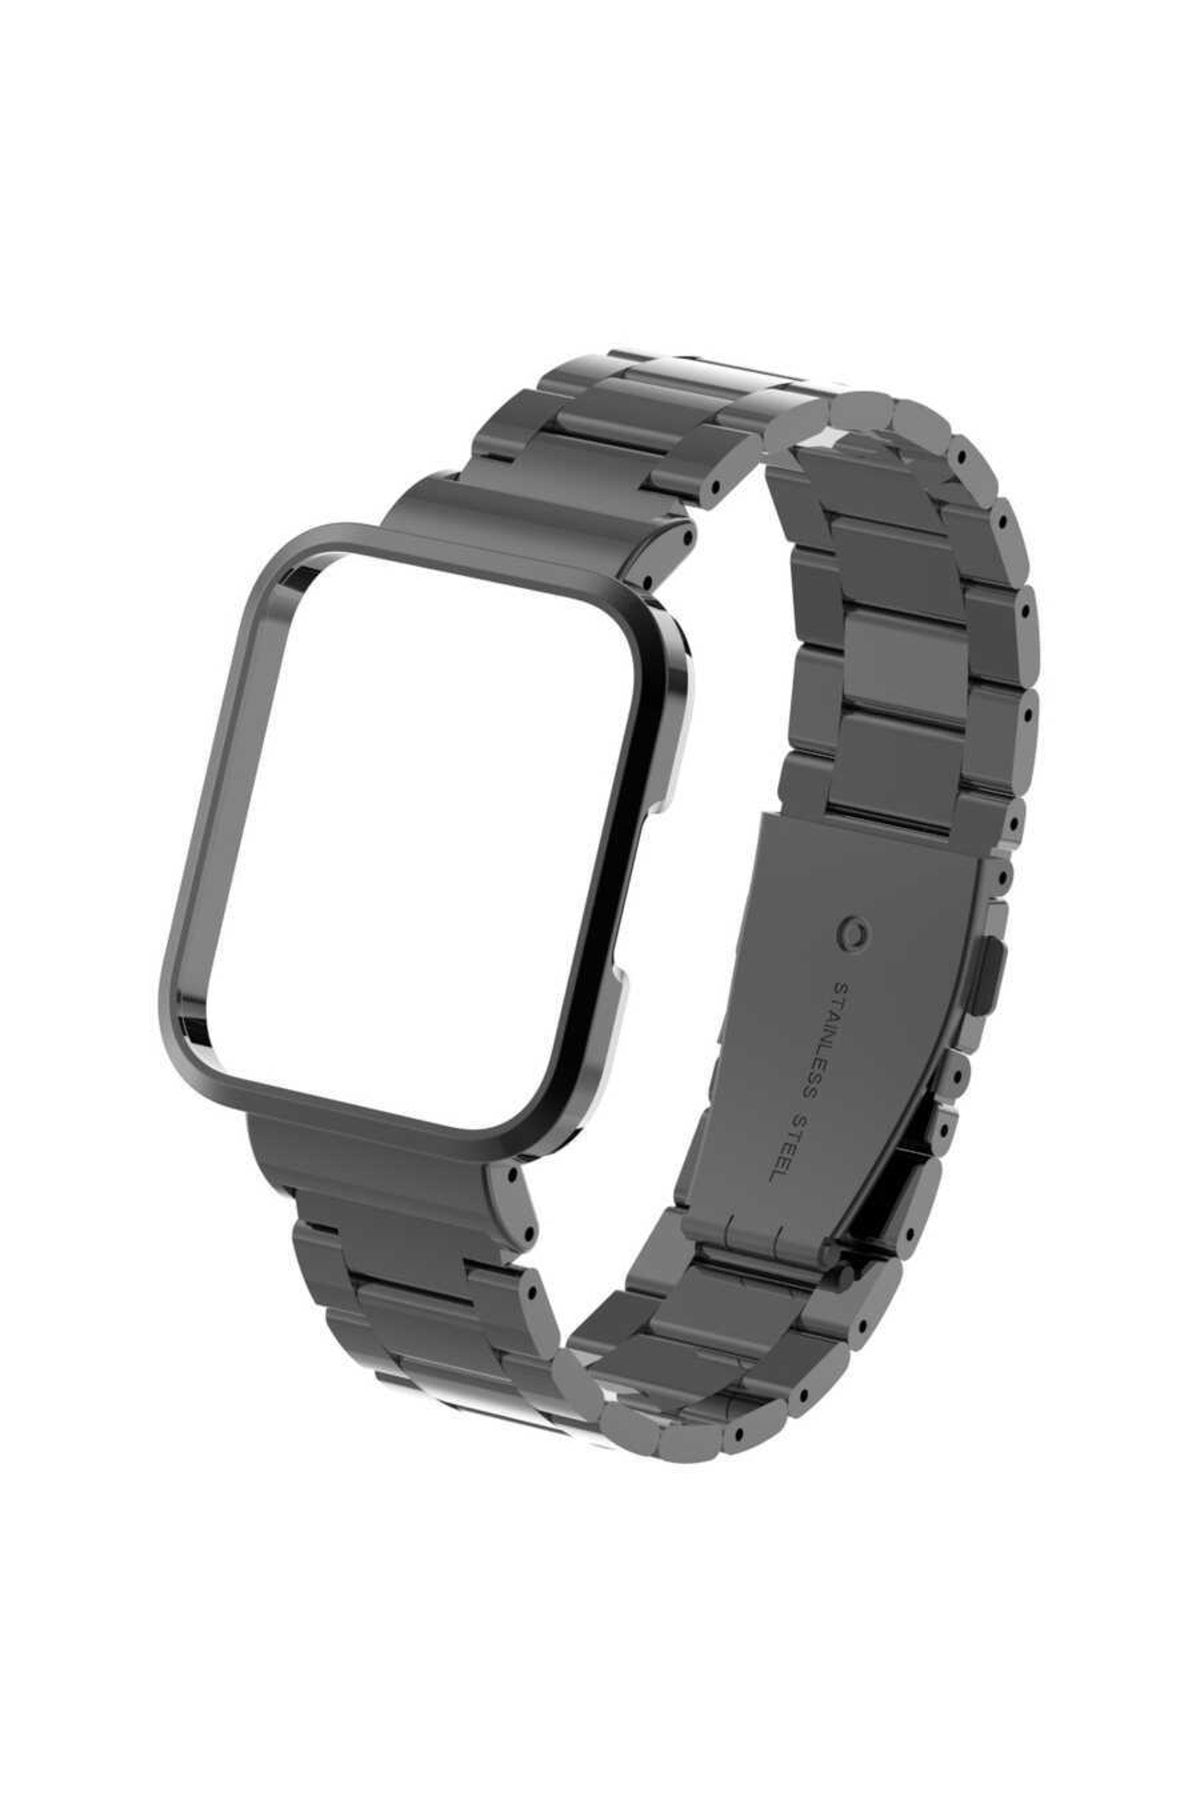 for Xiaomi Mi Watch Lite / Redmi Watch Strap Stainless Steel Band + Metal  Case